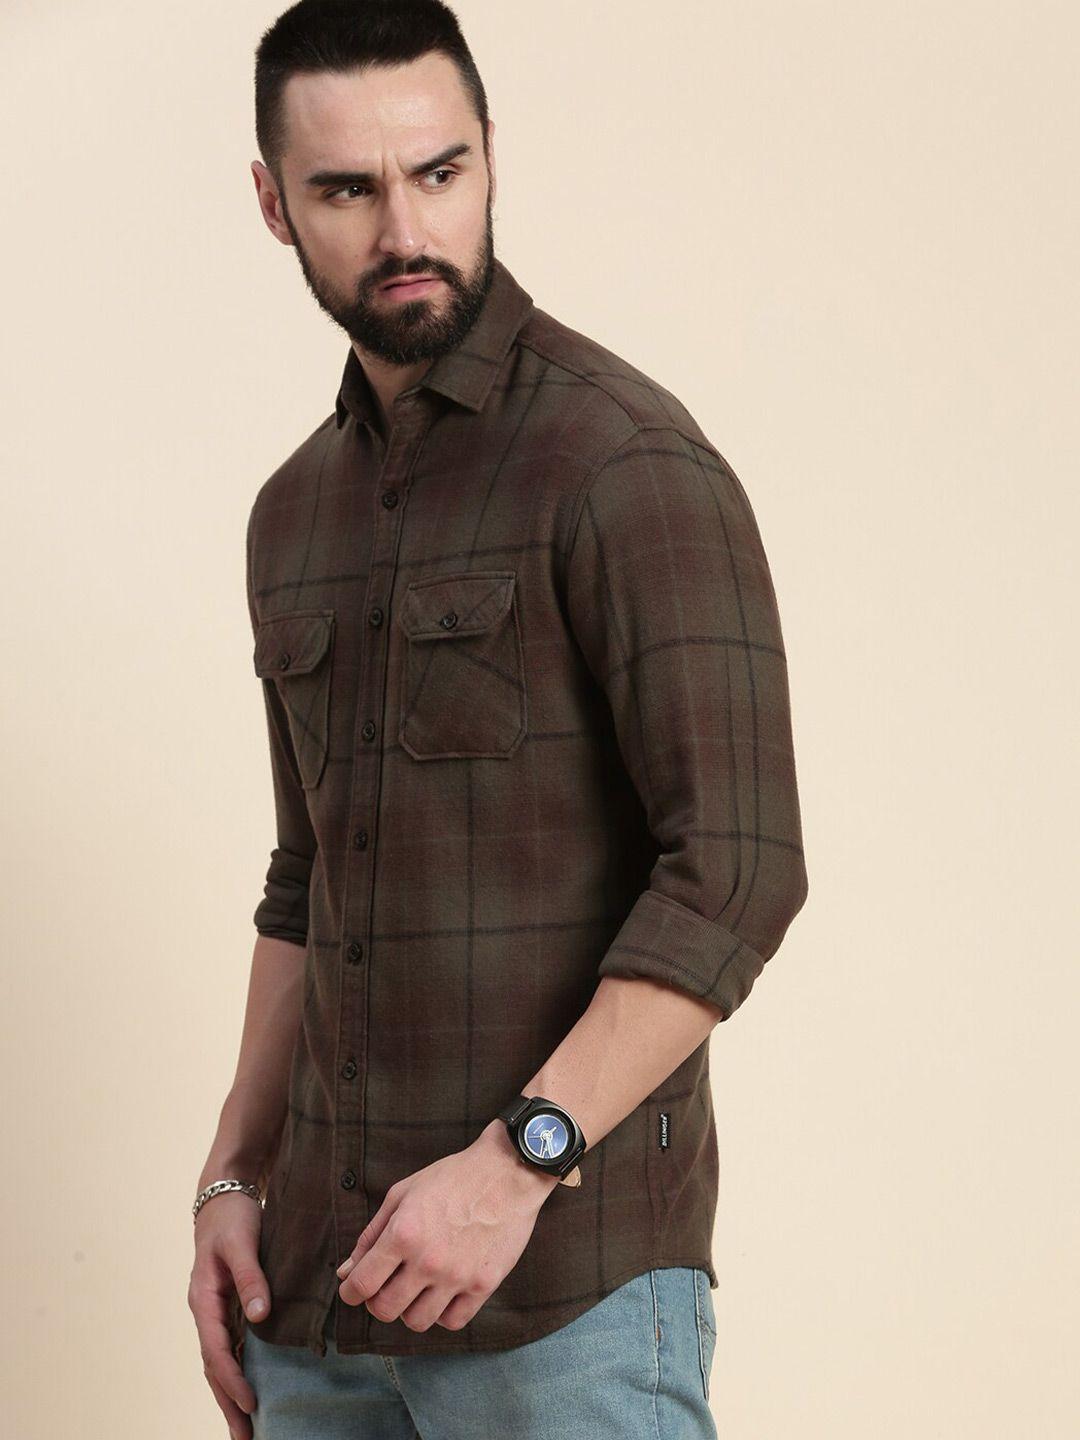 dillinger tartan checks flannel spread collar long sleeves cotton casual shirt